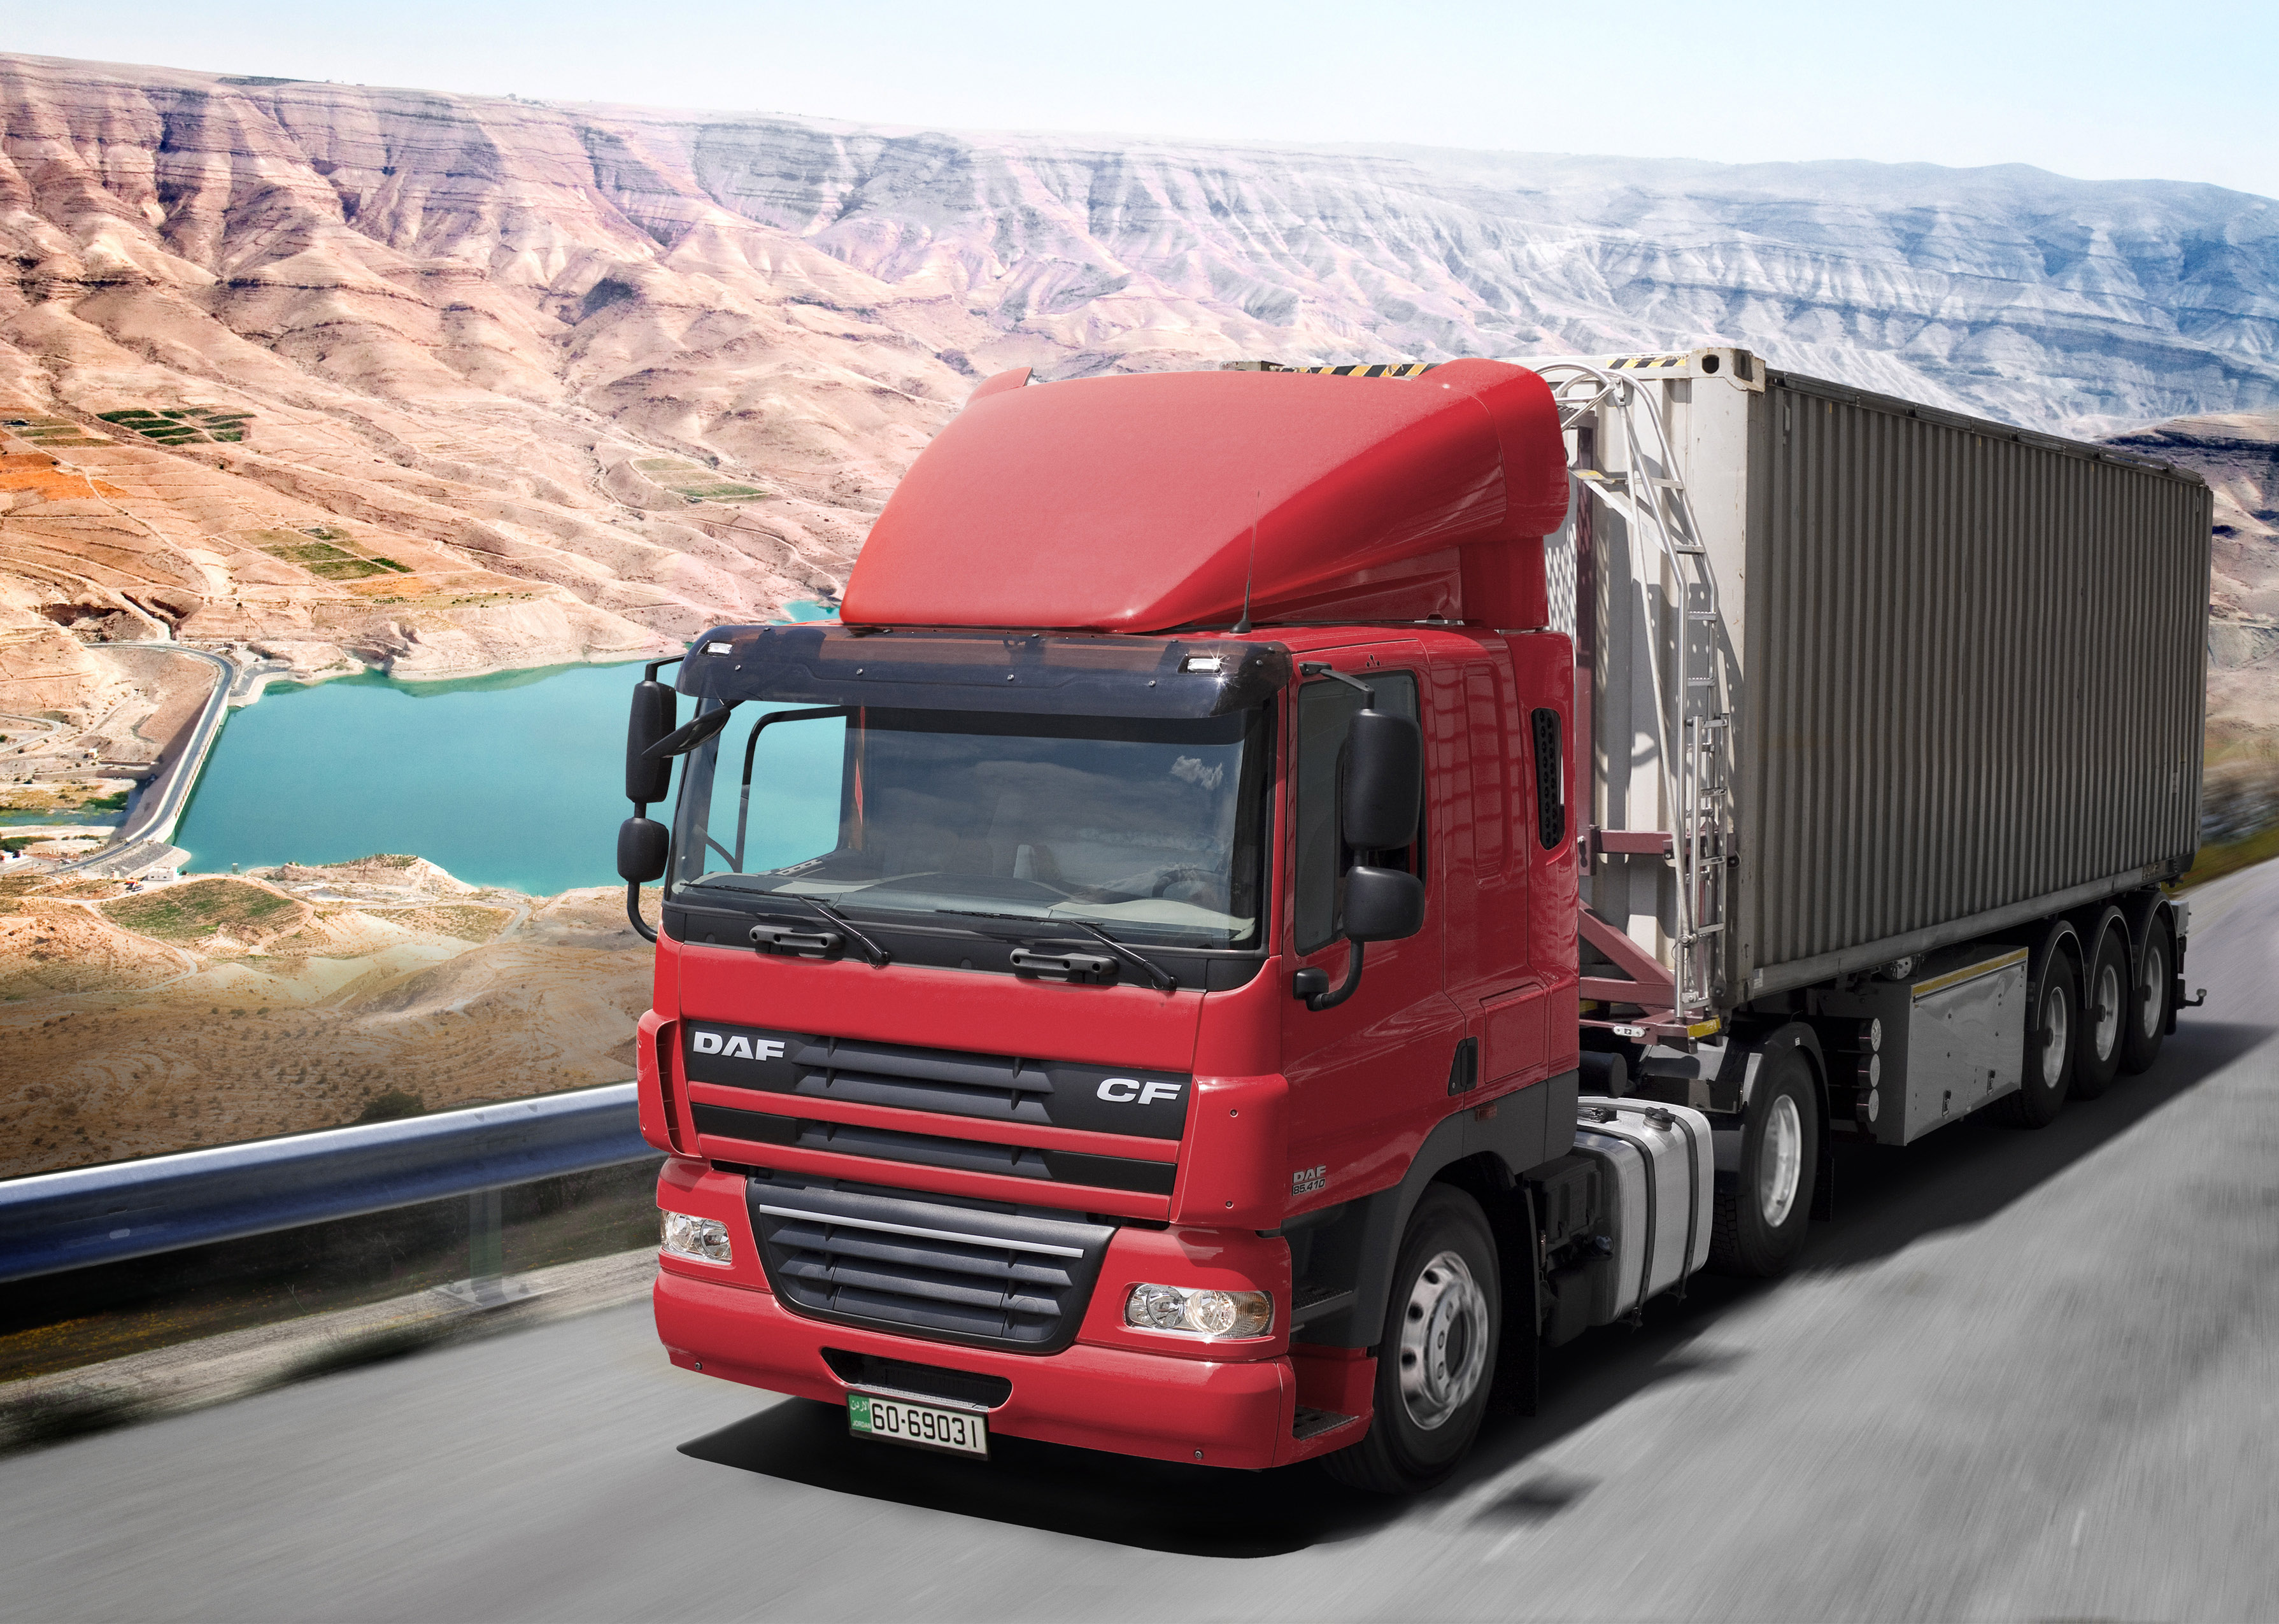 DAF delivers 500th truck to Jordan